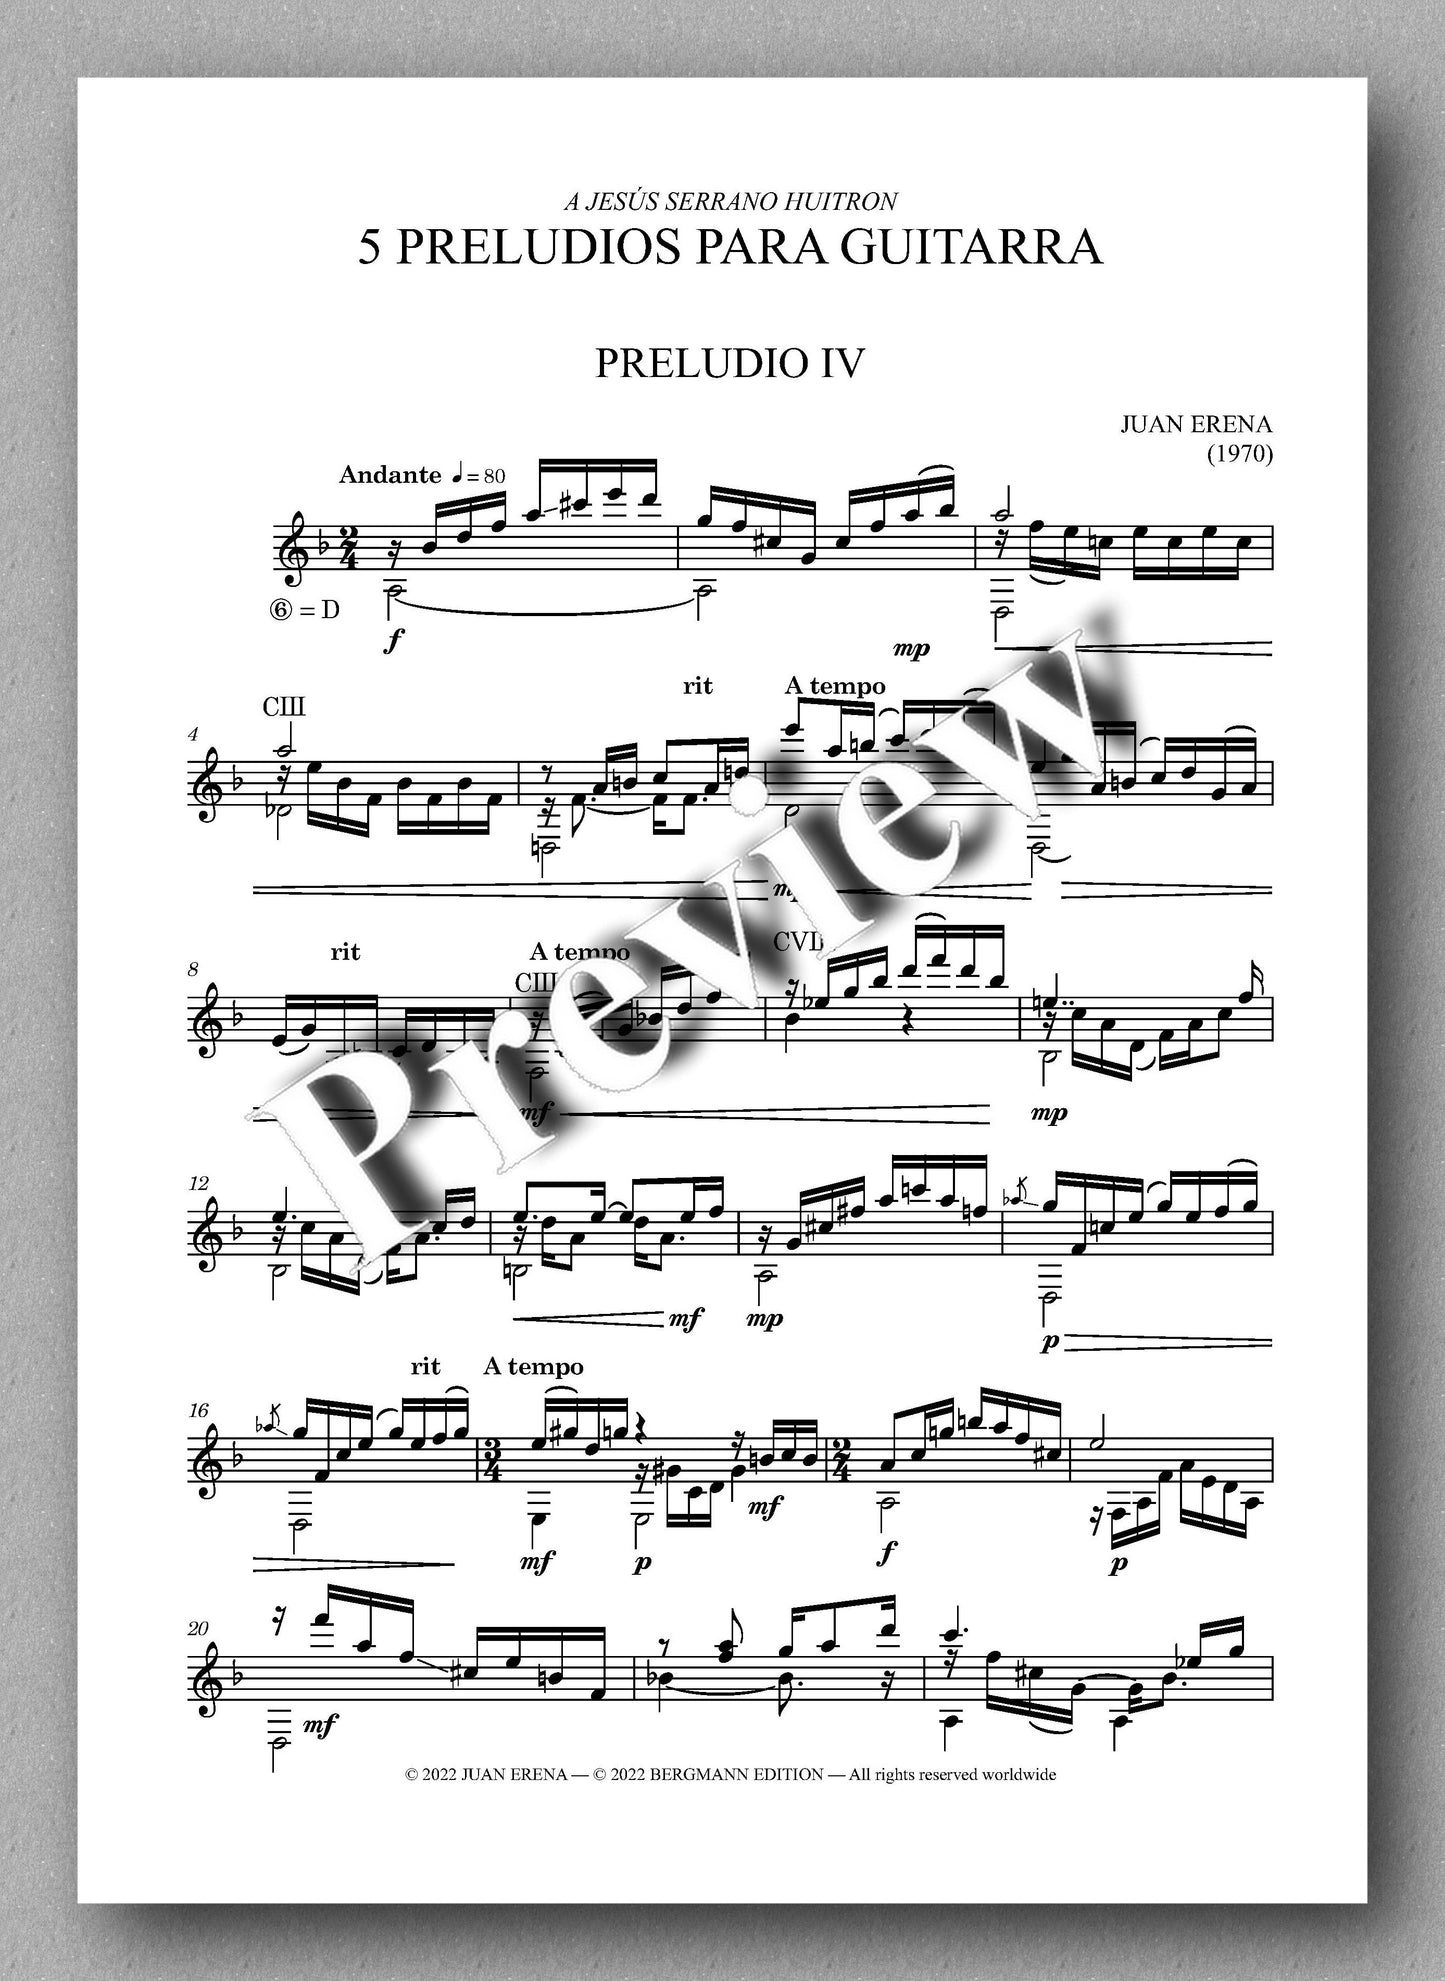 Juan Erena, PRELUDIO IV - preview of the music score